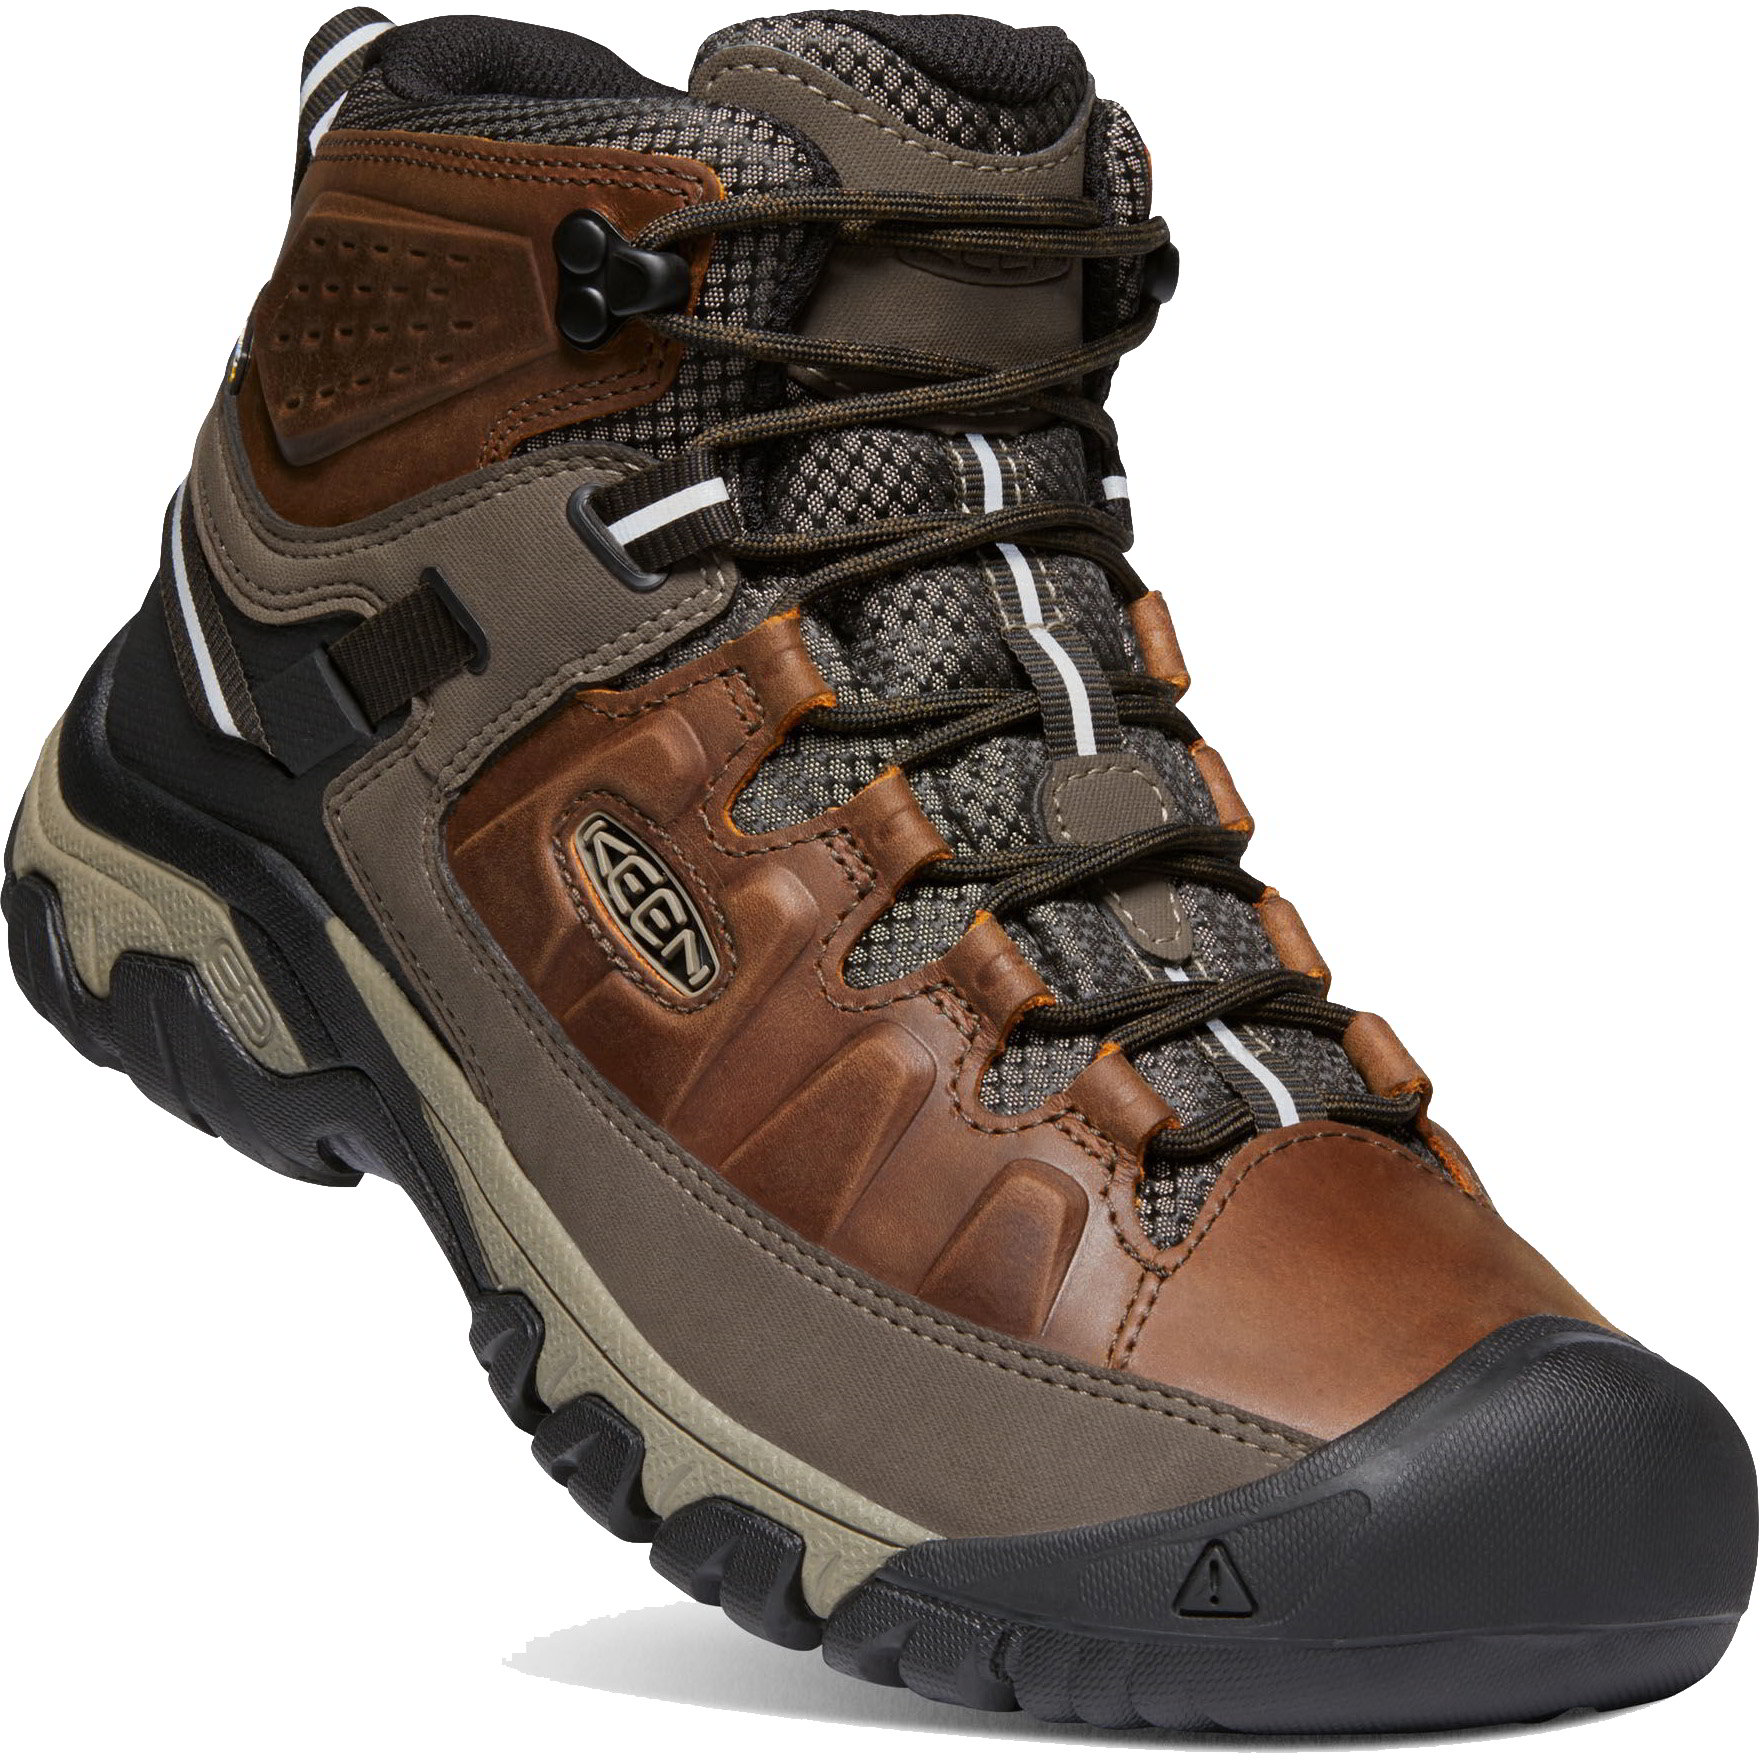 Keen Men's Targhee III Mid WP Waterproof Walking Hiking Boots - UK 10.5 / EU 45 / US 11.5